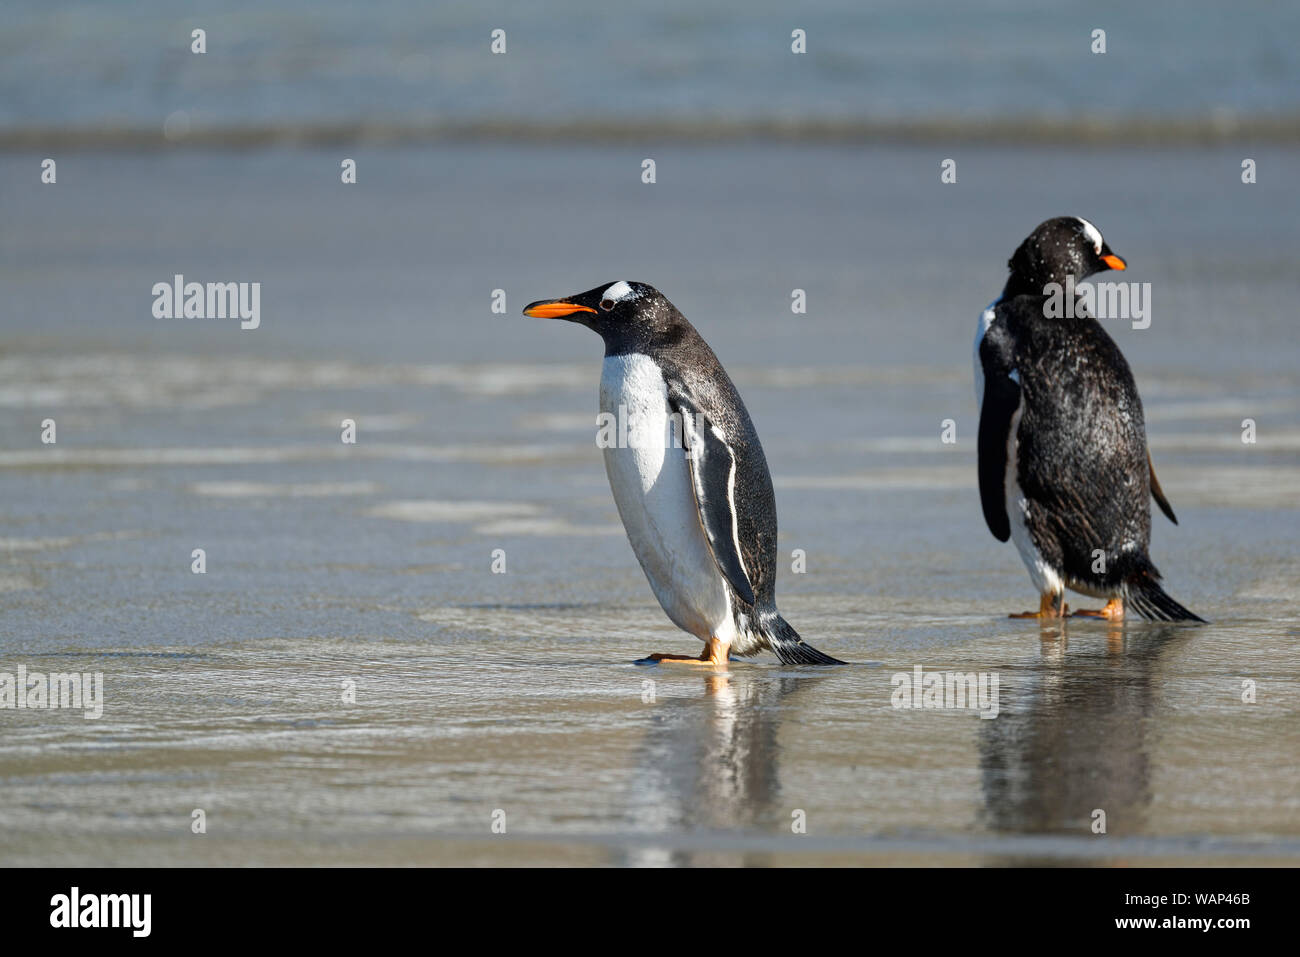 Zwei Eselspinguine (Pygoscelis papua) am Strand, Falkland Inseln. Zwei Gentoo Penguins oh den Strand, Falkland Inseln Stockfoto